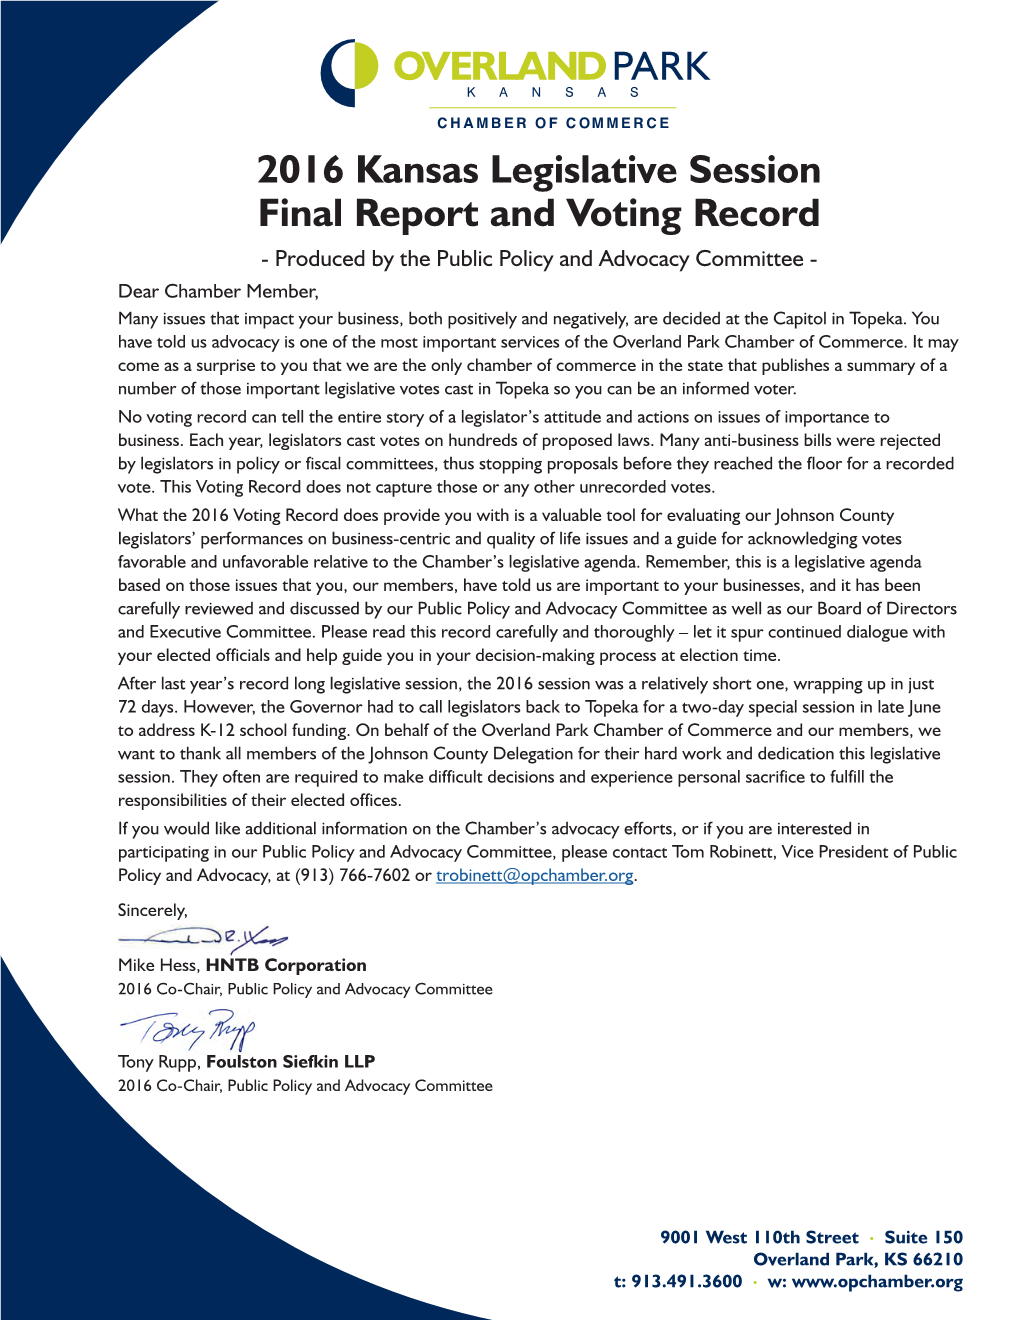 2016 Kansas Legislative Session Final Report and Voting Record